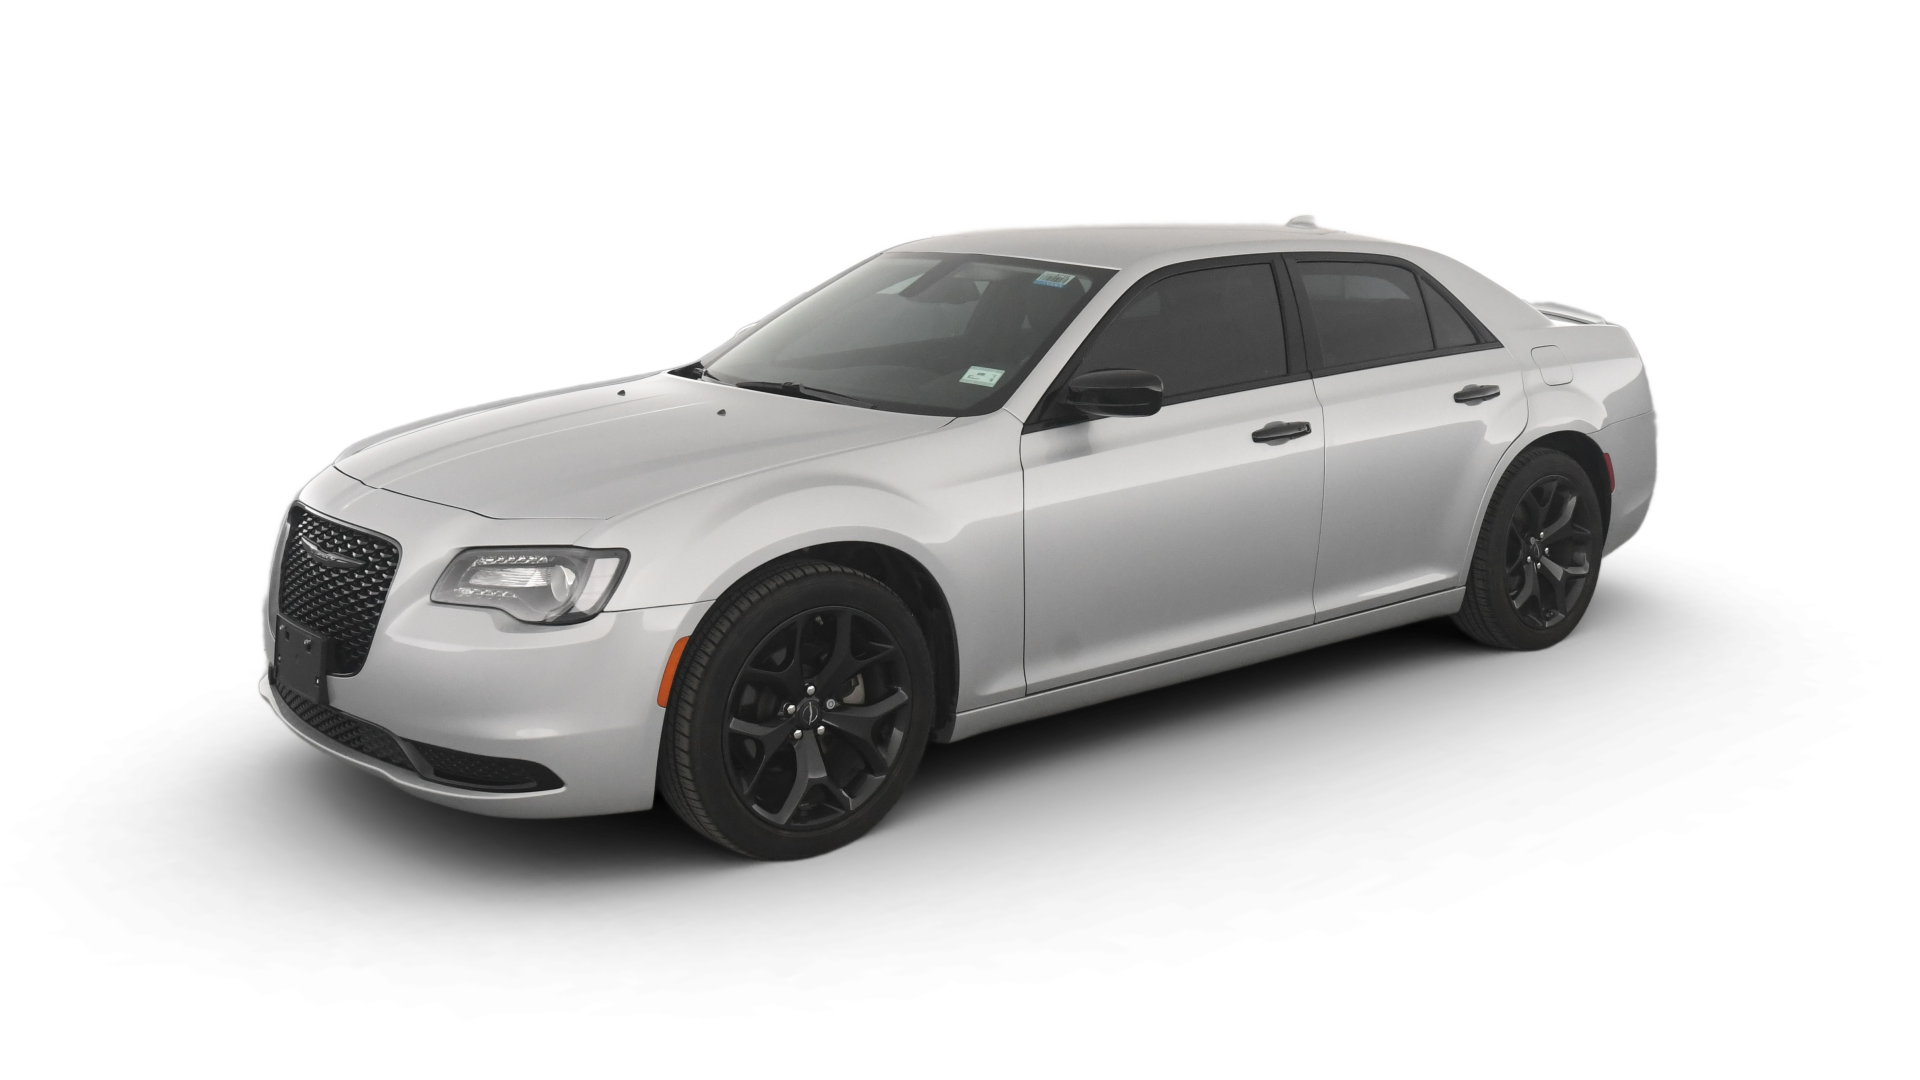 Used Chrysler 300 for Sale Online